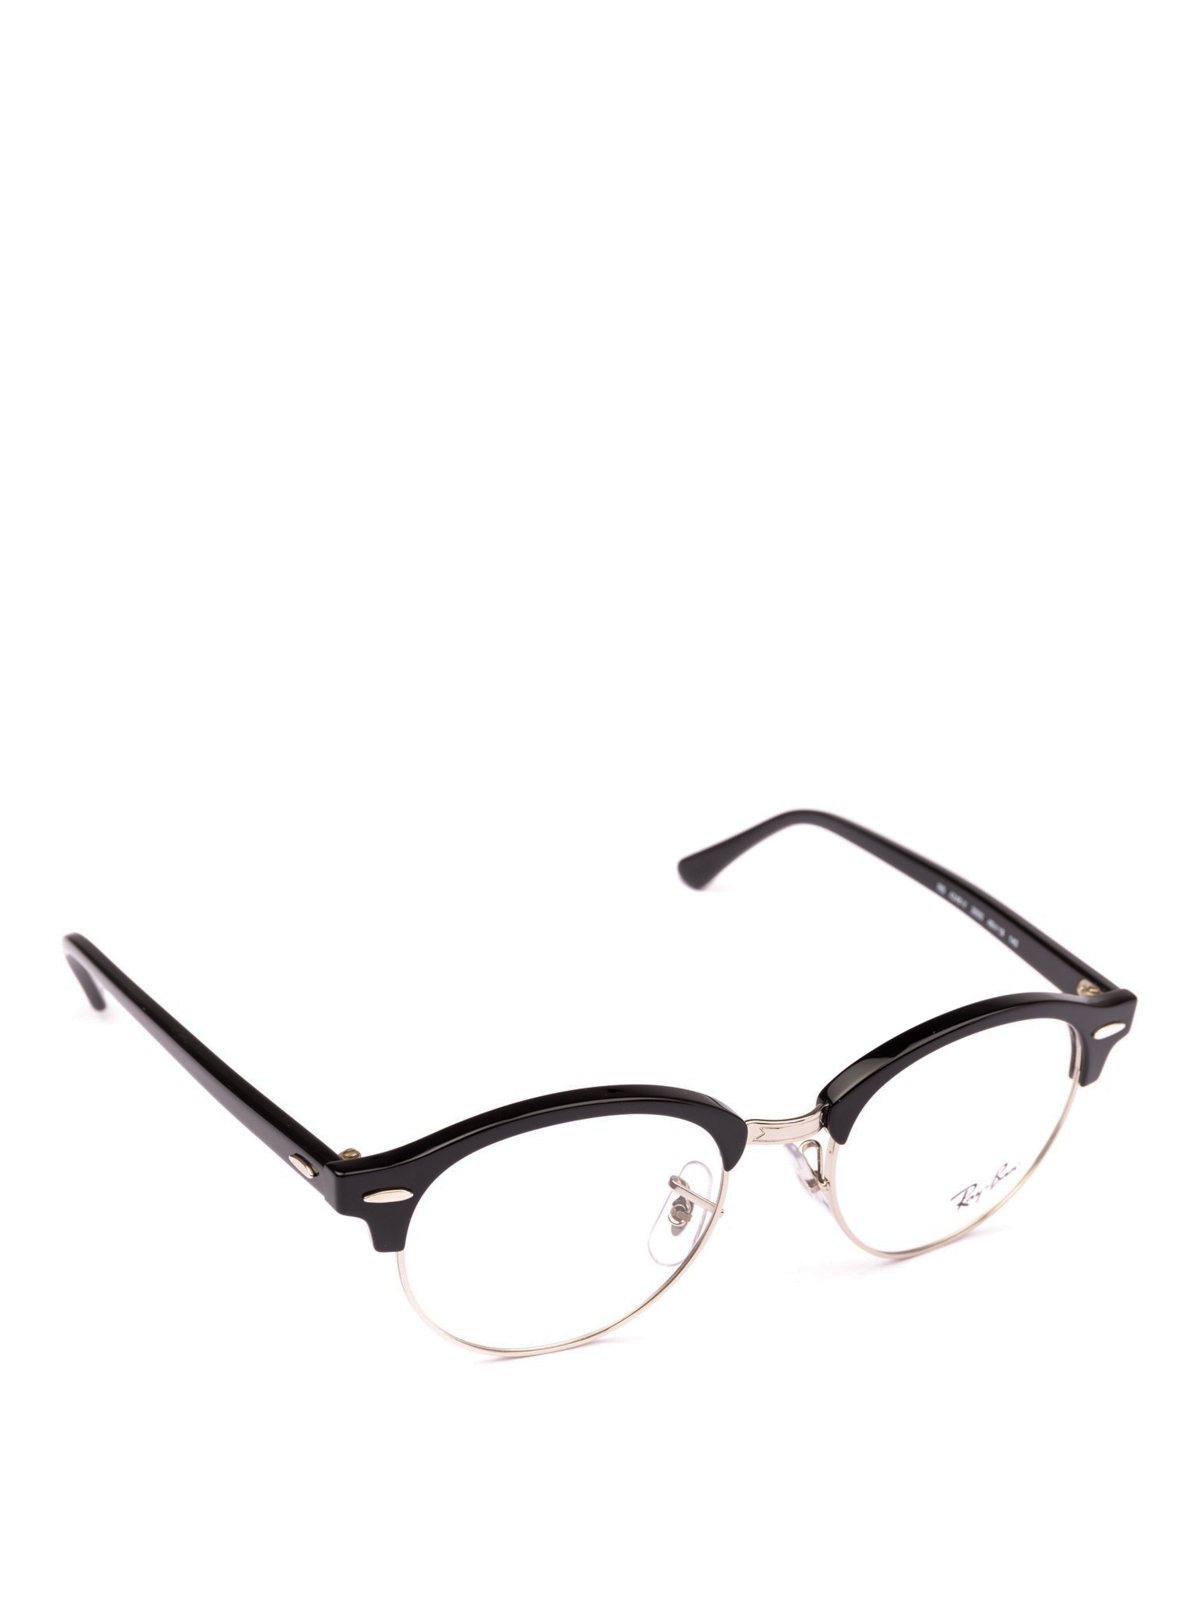 Glasses Ray Ban - Black acetate and metal half frame glasses - RB4246V2000